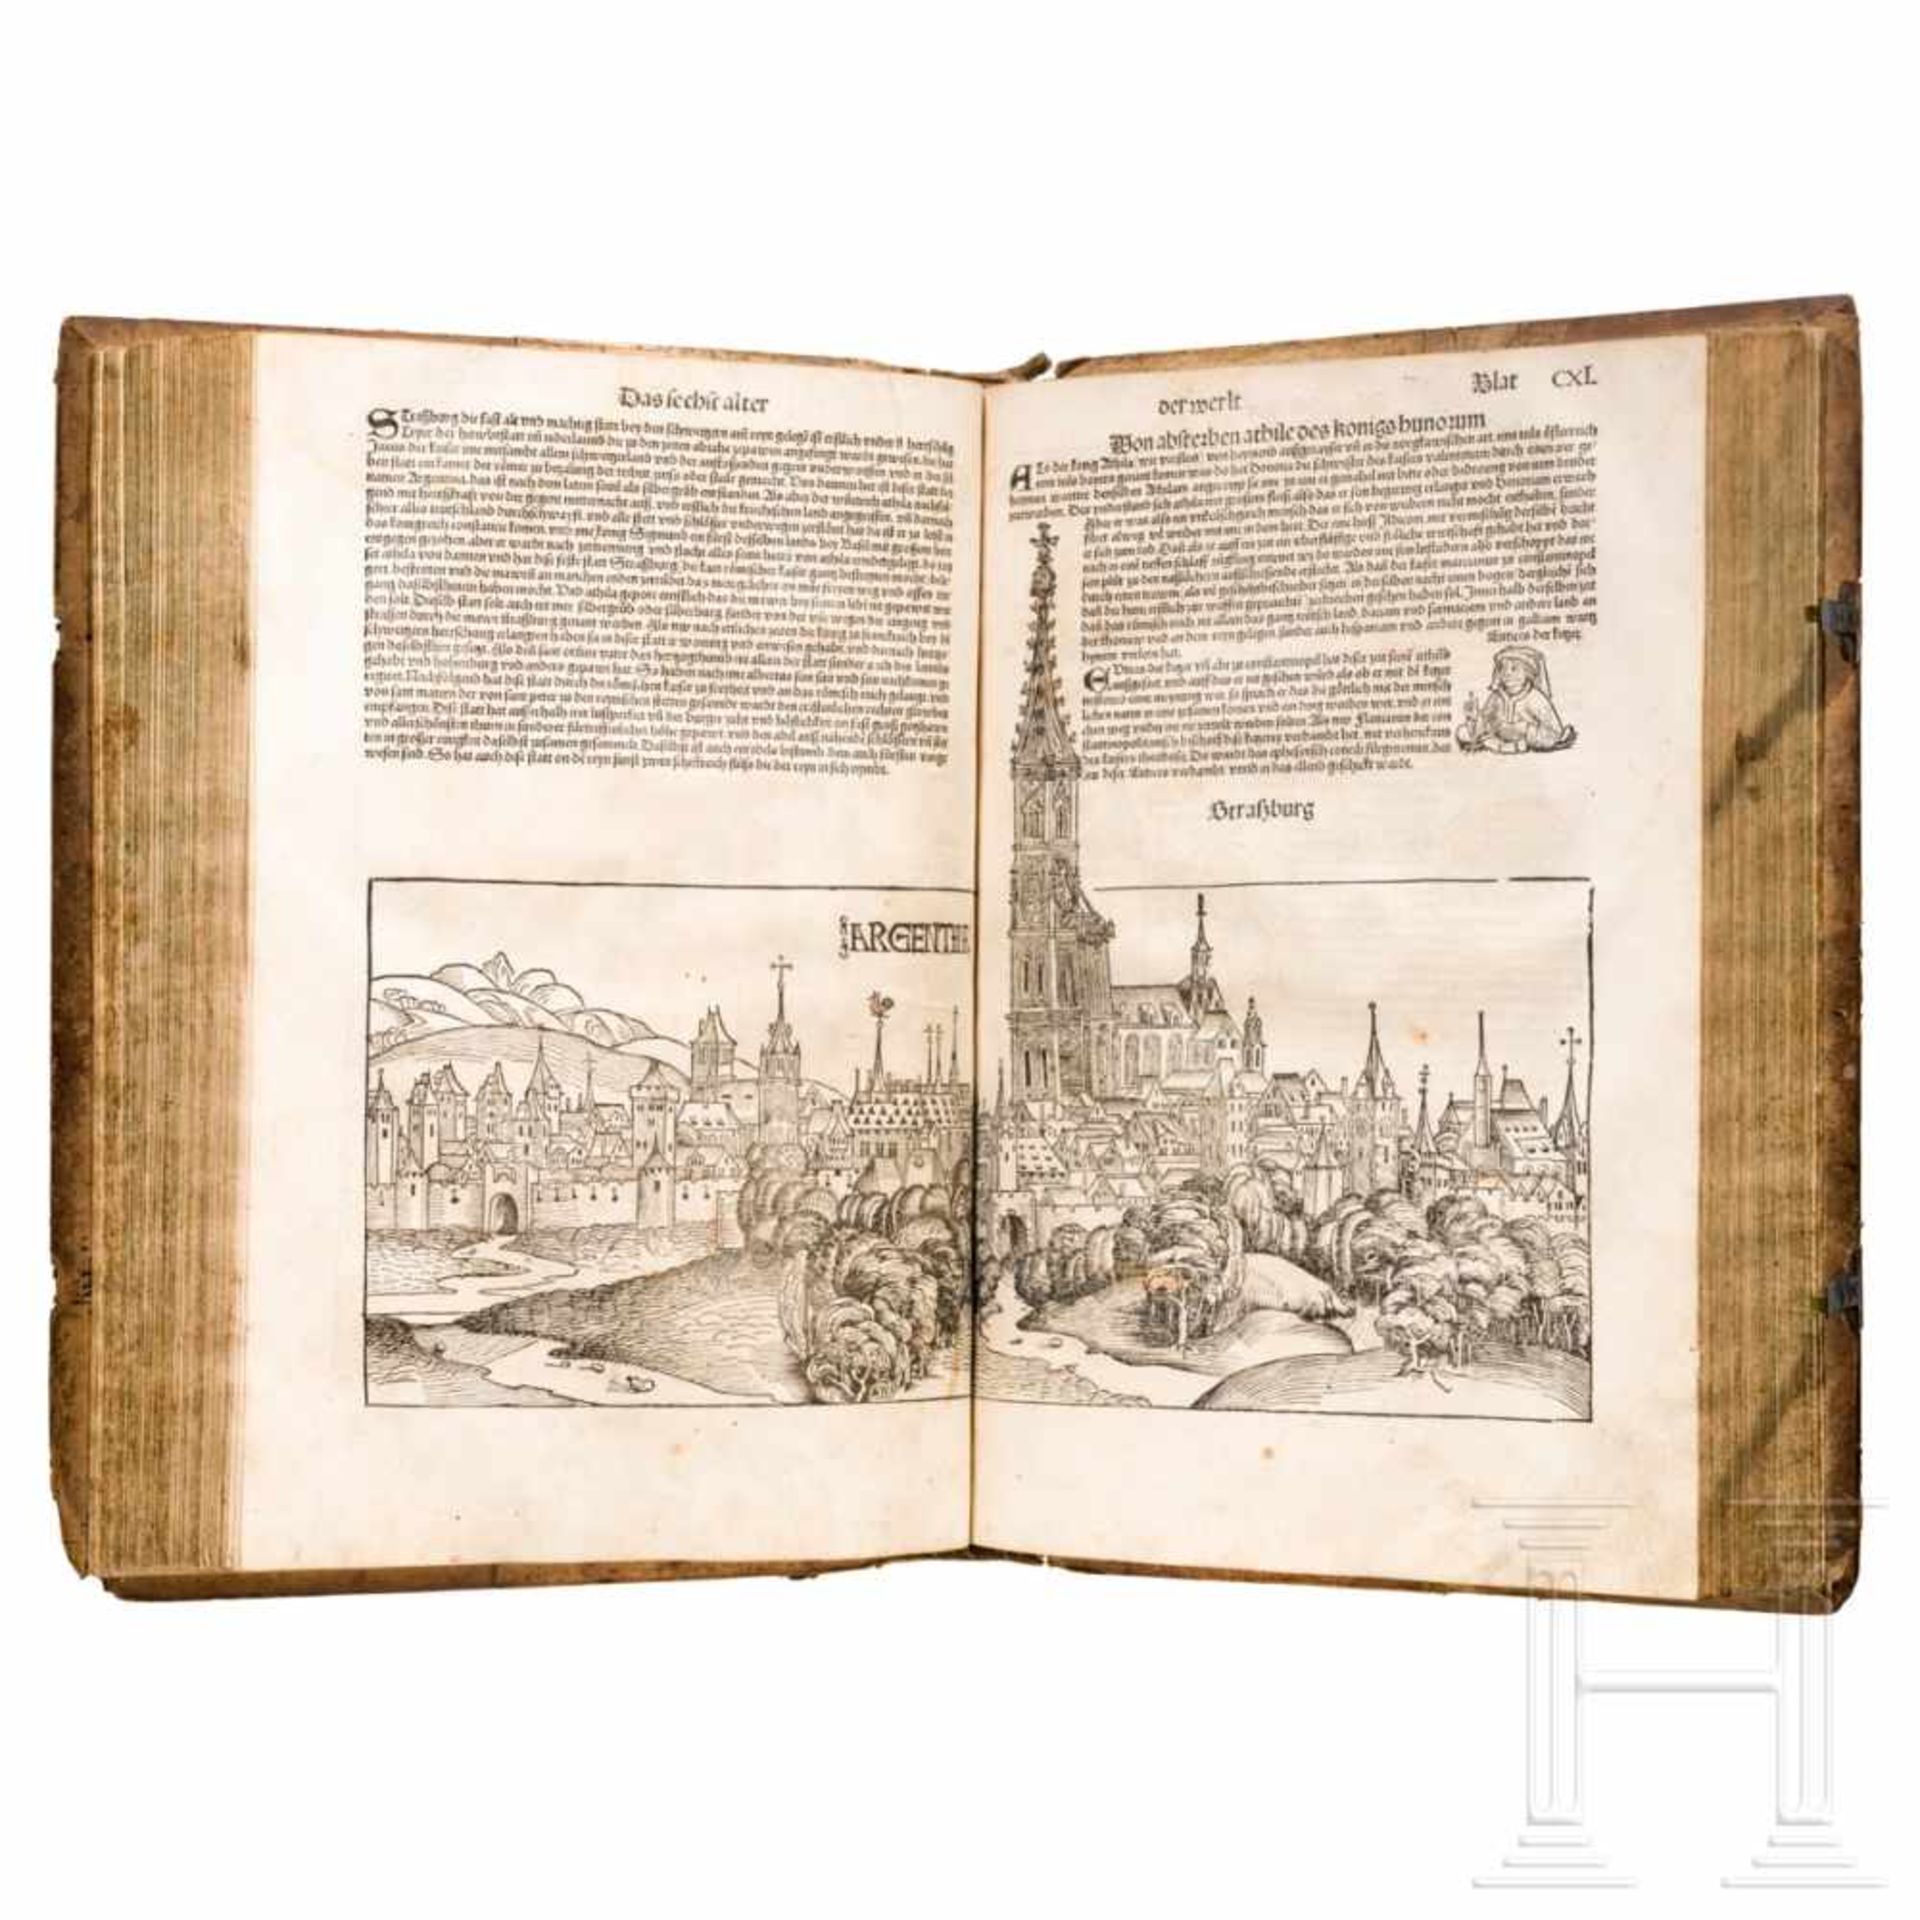 Hartmann Schedel, Das Buch der Chroniken, Nürnberg, A. Koberger, 1493 - Image 23 of 51